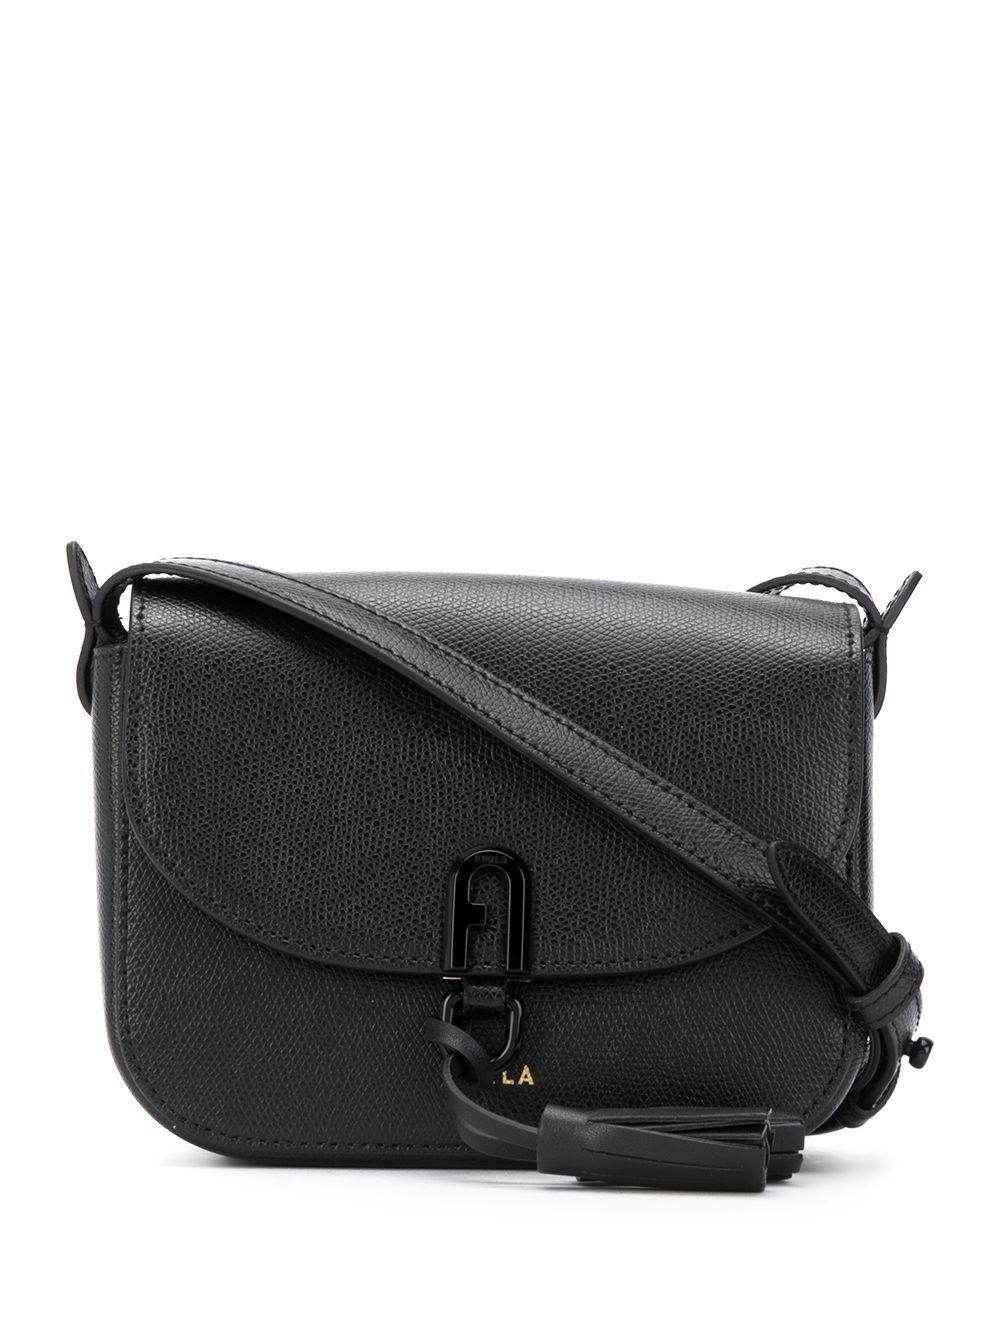 Furla Leather Tassel Detail Crossbody Bag in Black - Lyst